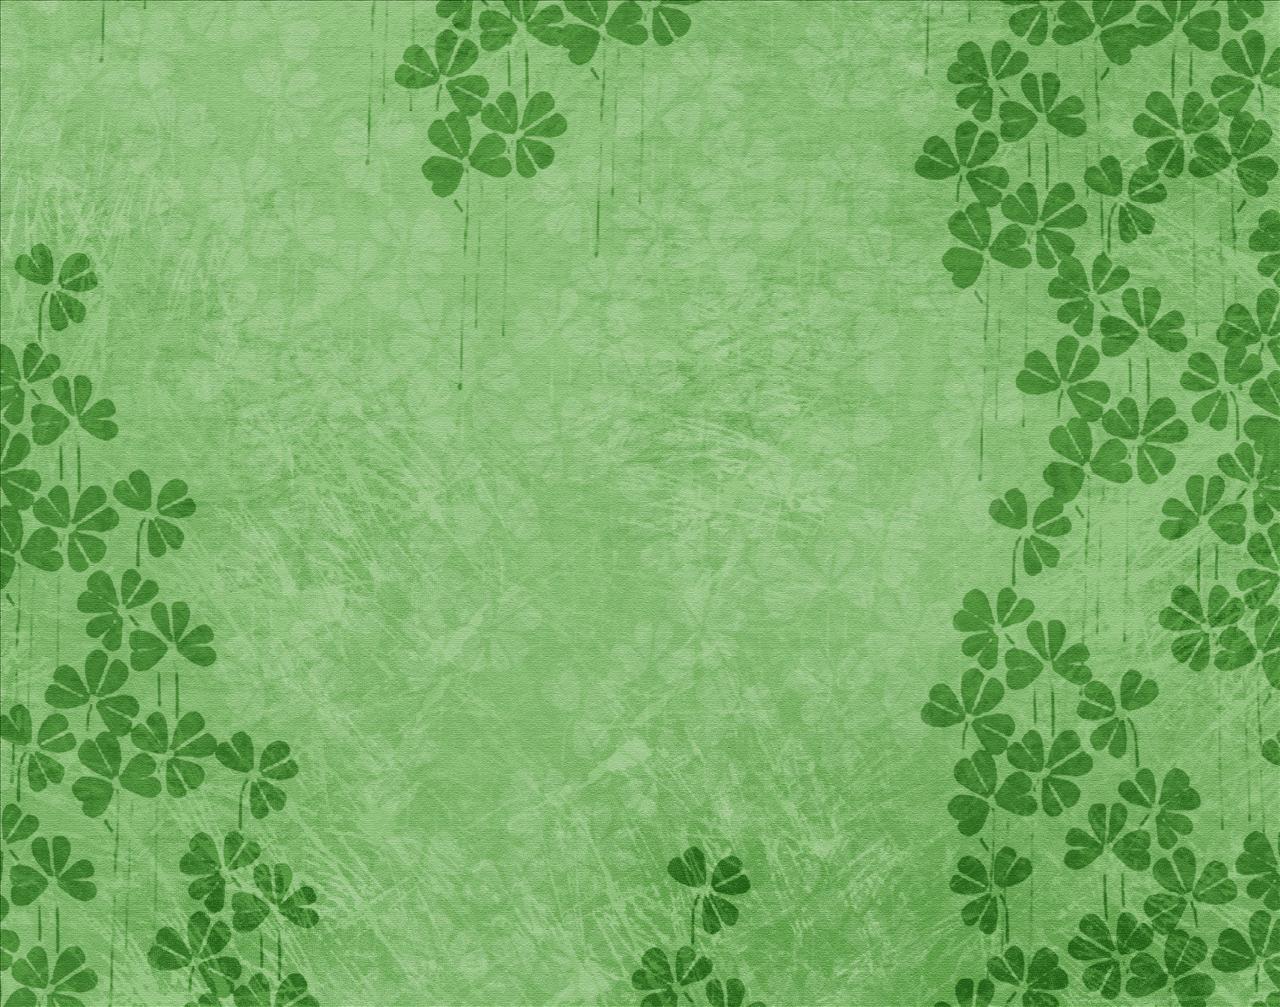 Clover Shamrock Irish Green Background iPhone Cover